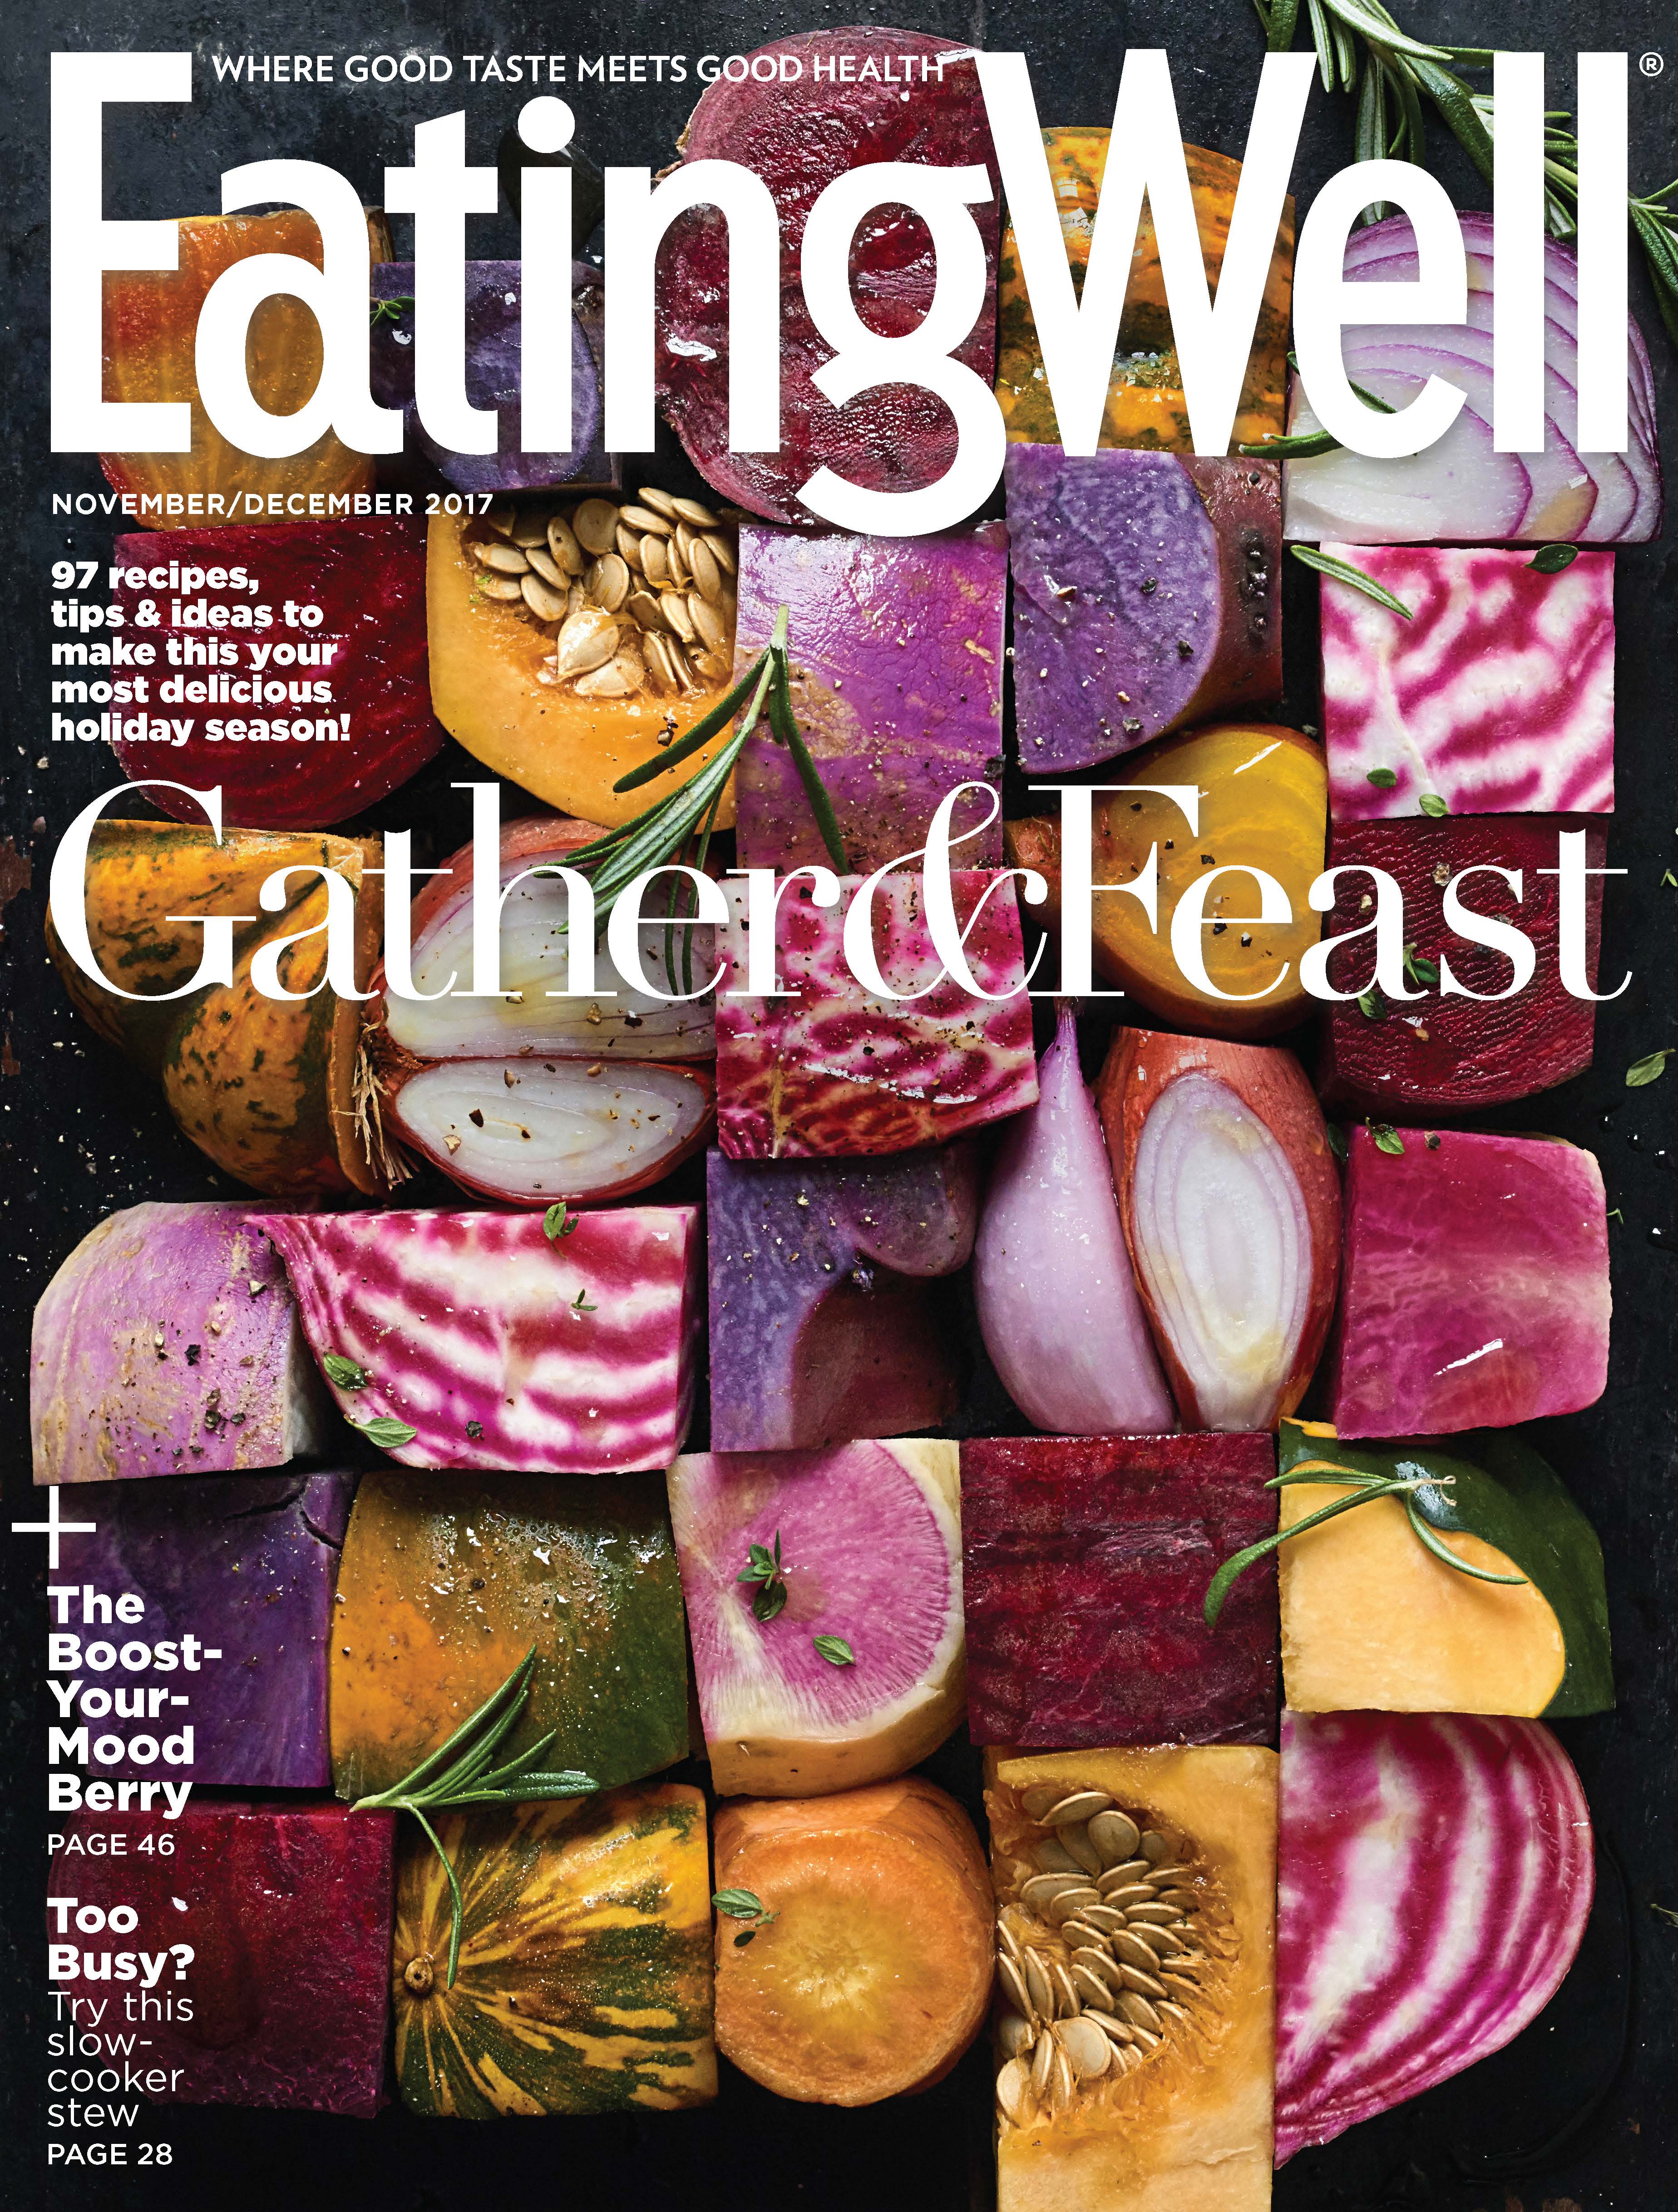 EatingWell  “Gather & Feast,” November/December 2017